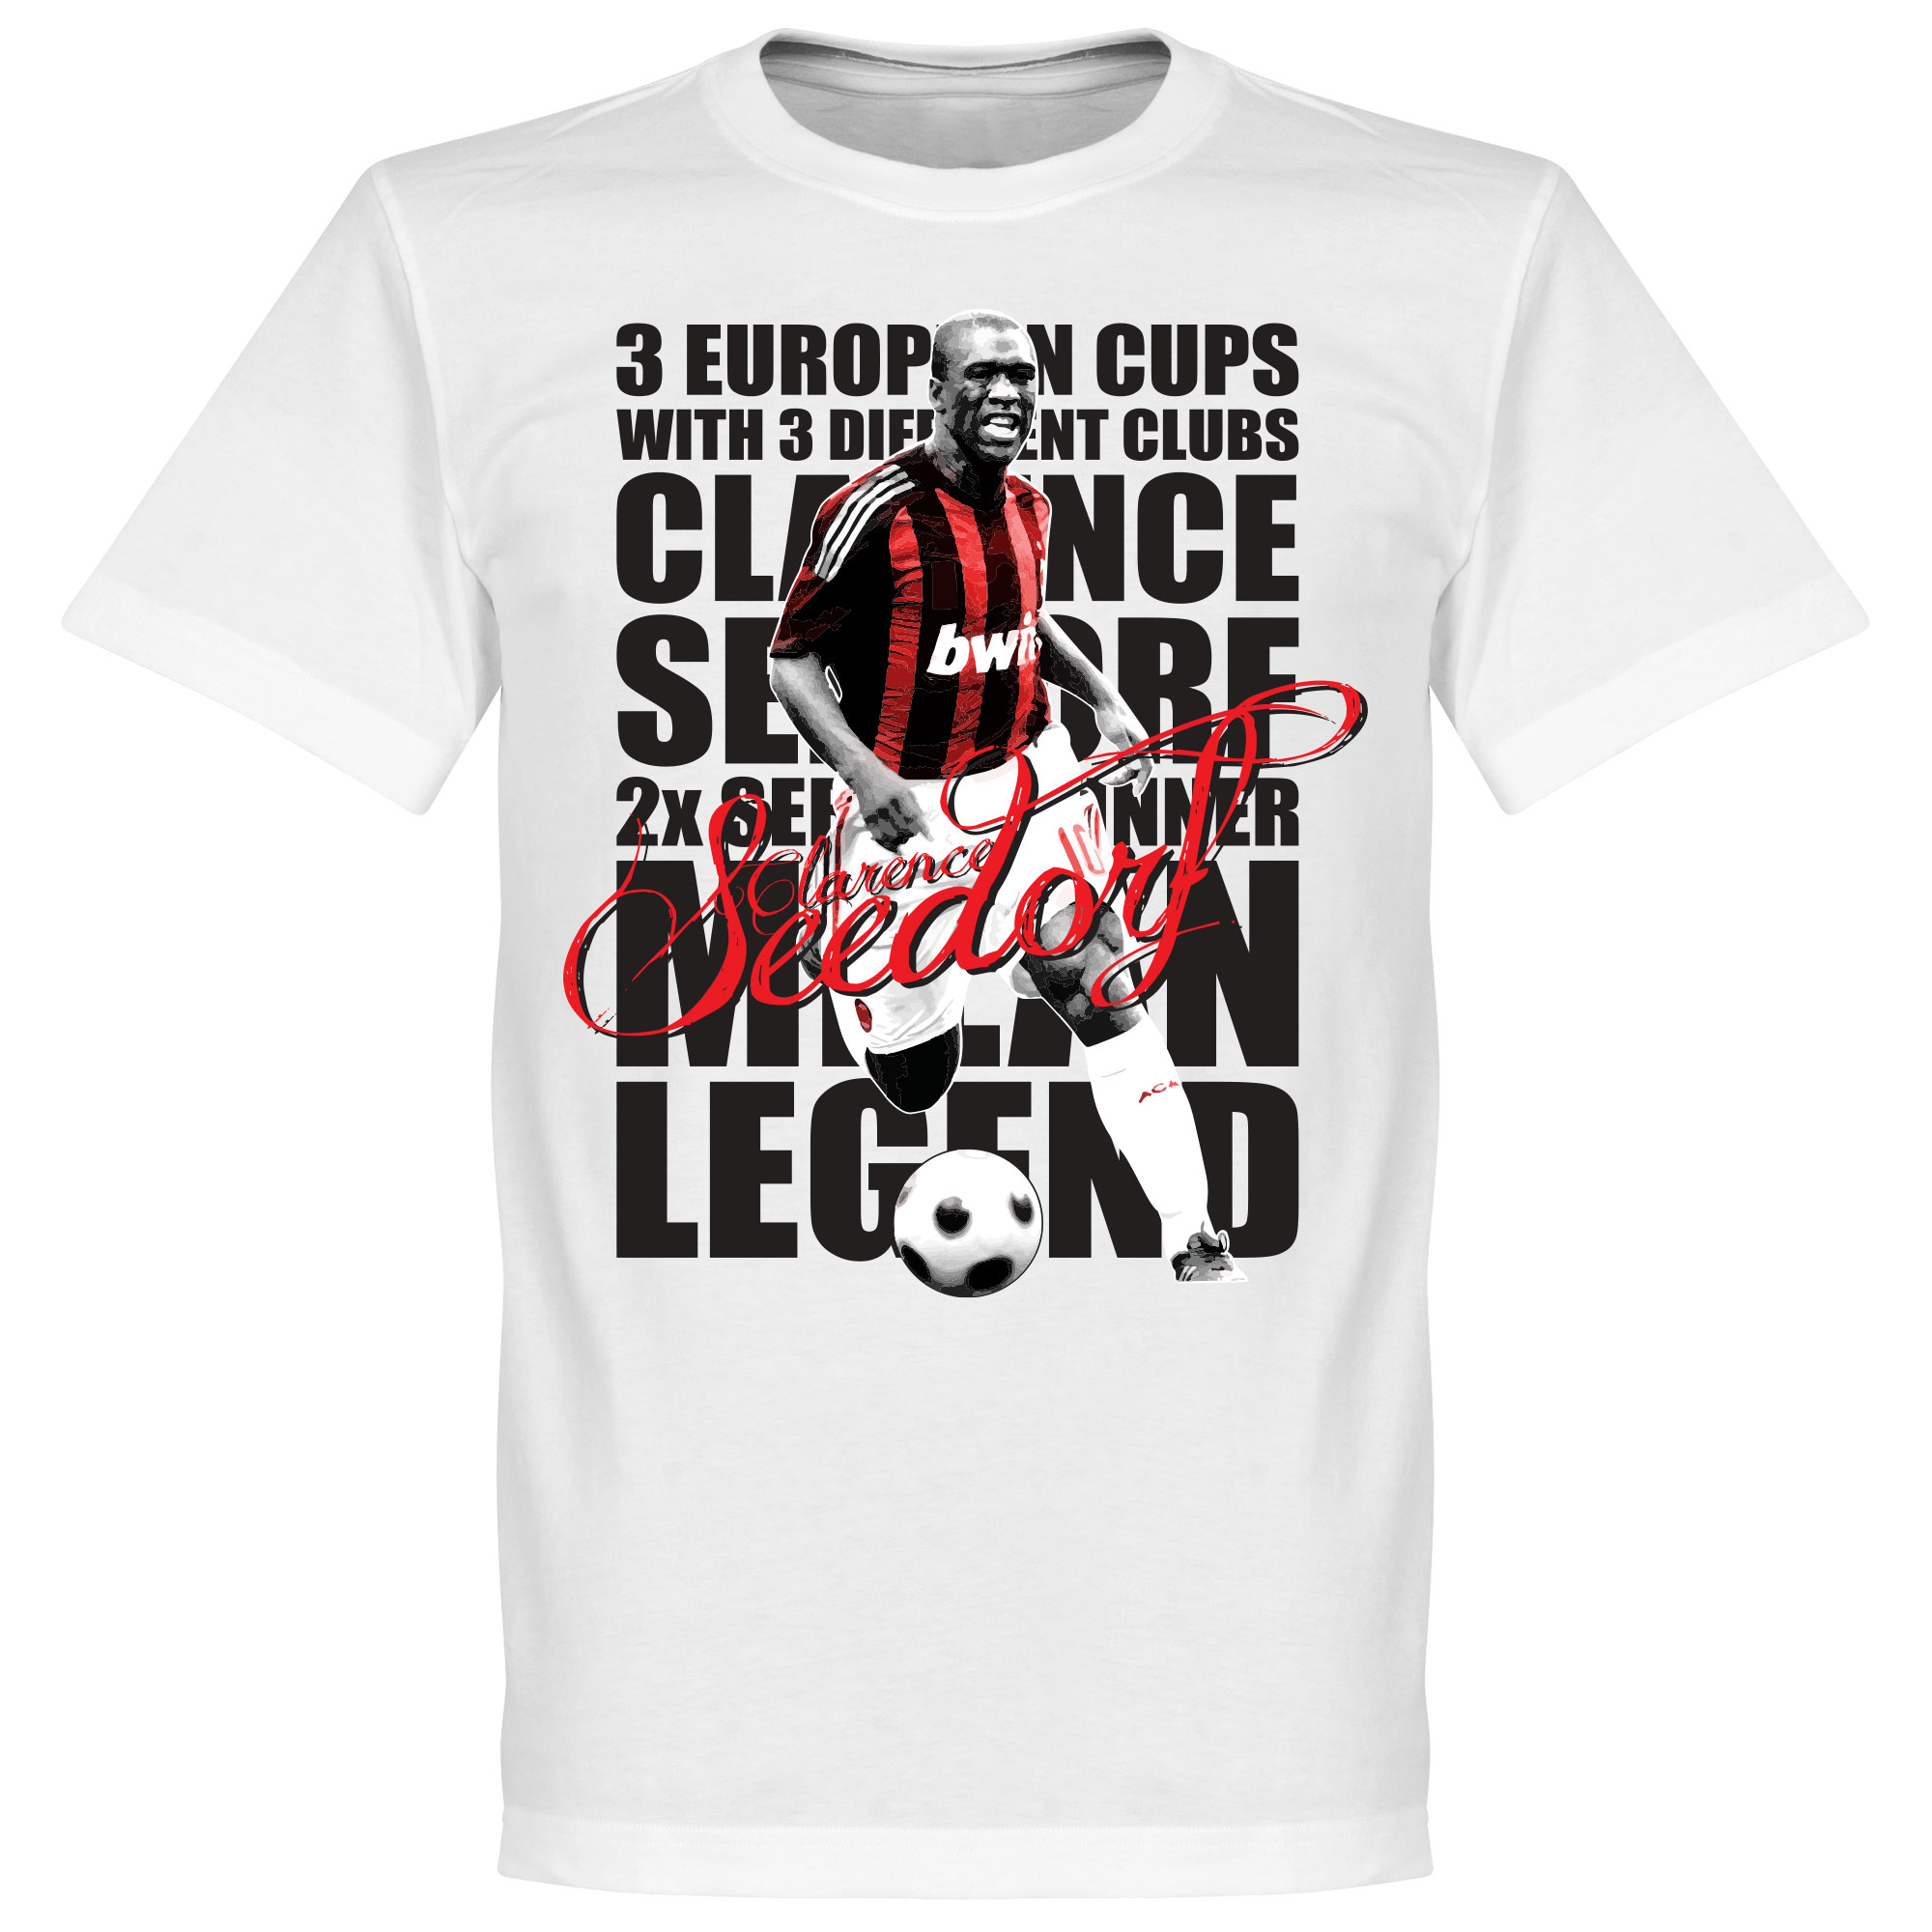 Seedorf Legend T-Shirt XS